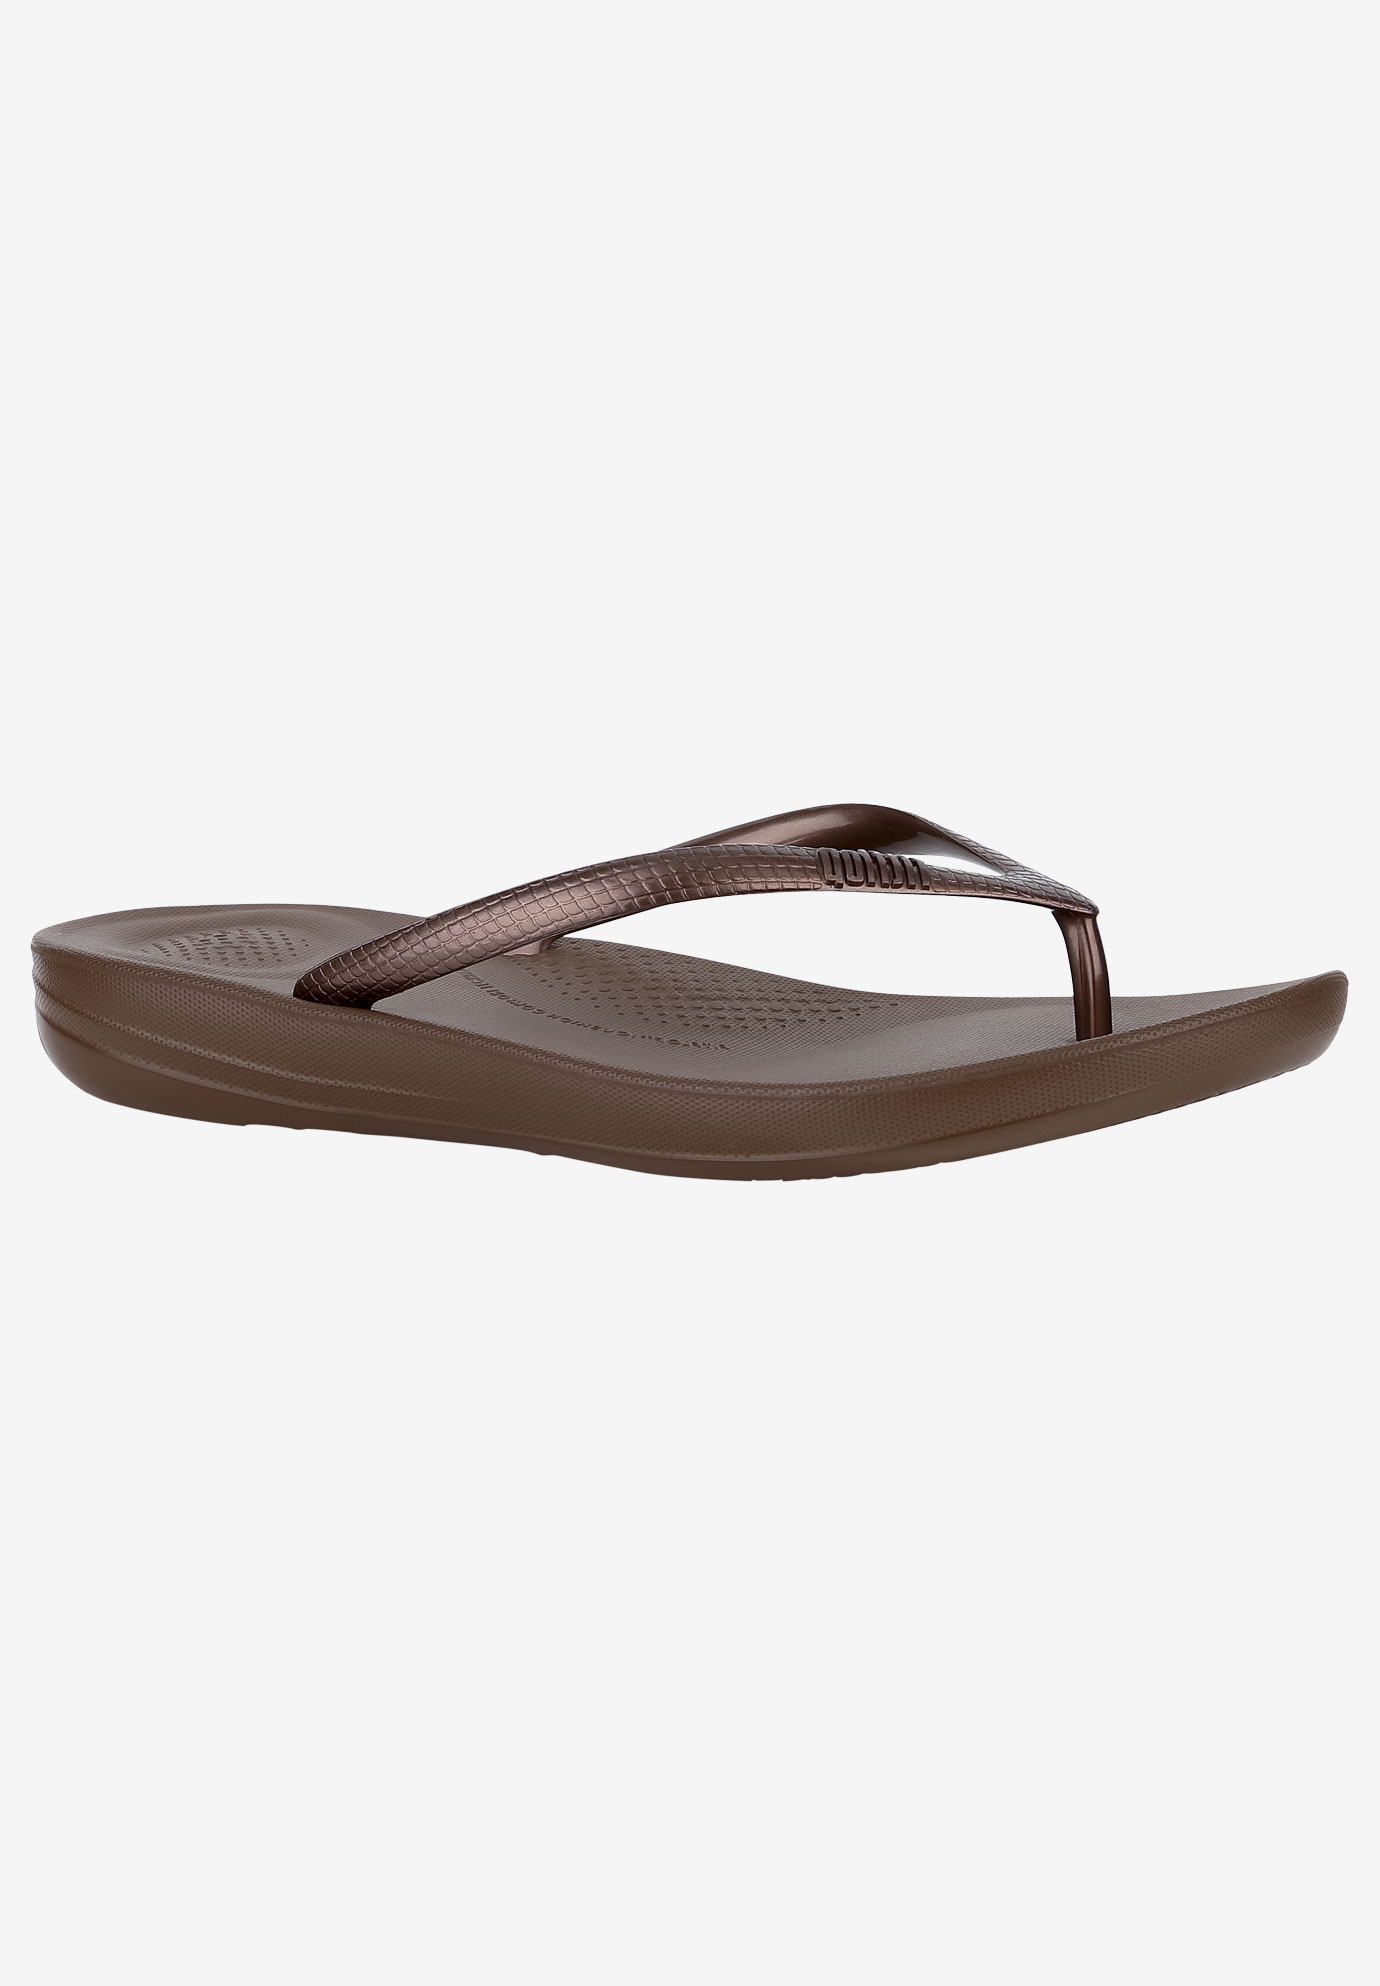 Iqushion Ergonomic Flip-Flop Sandal by FitFlop| Plus Size Casual ...